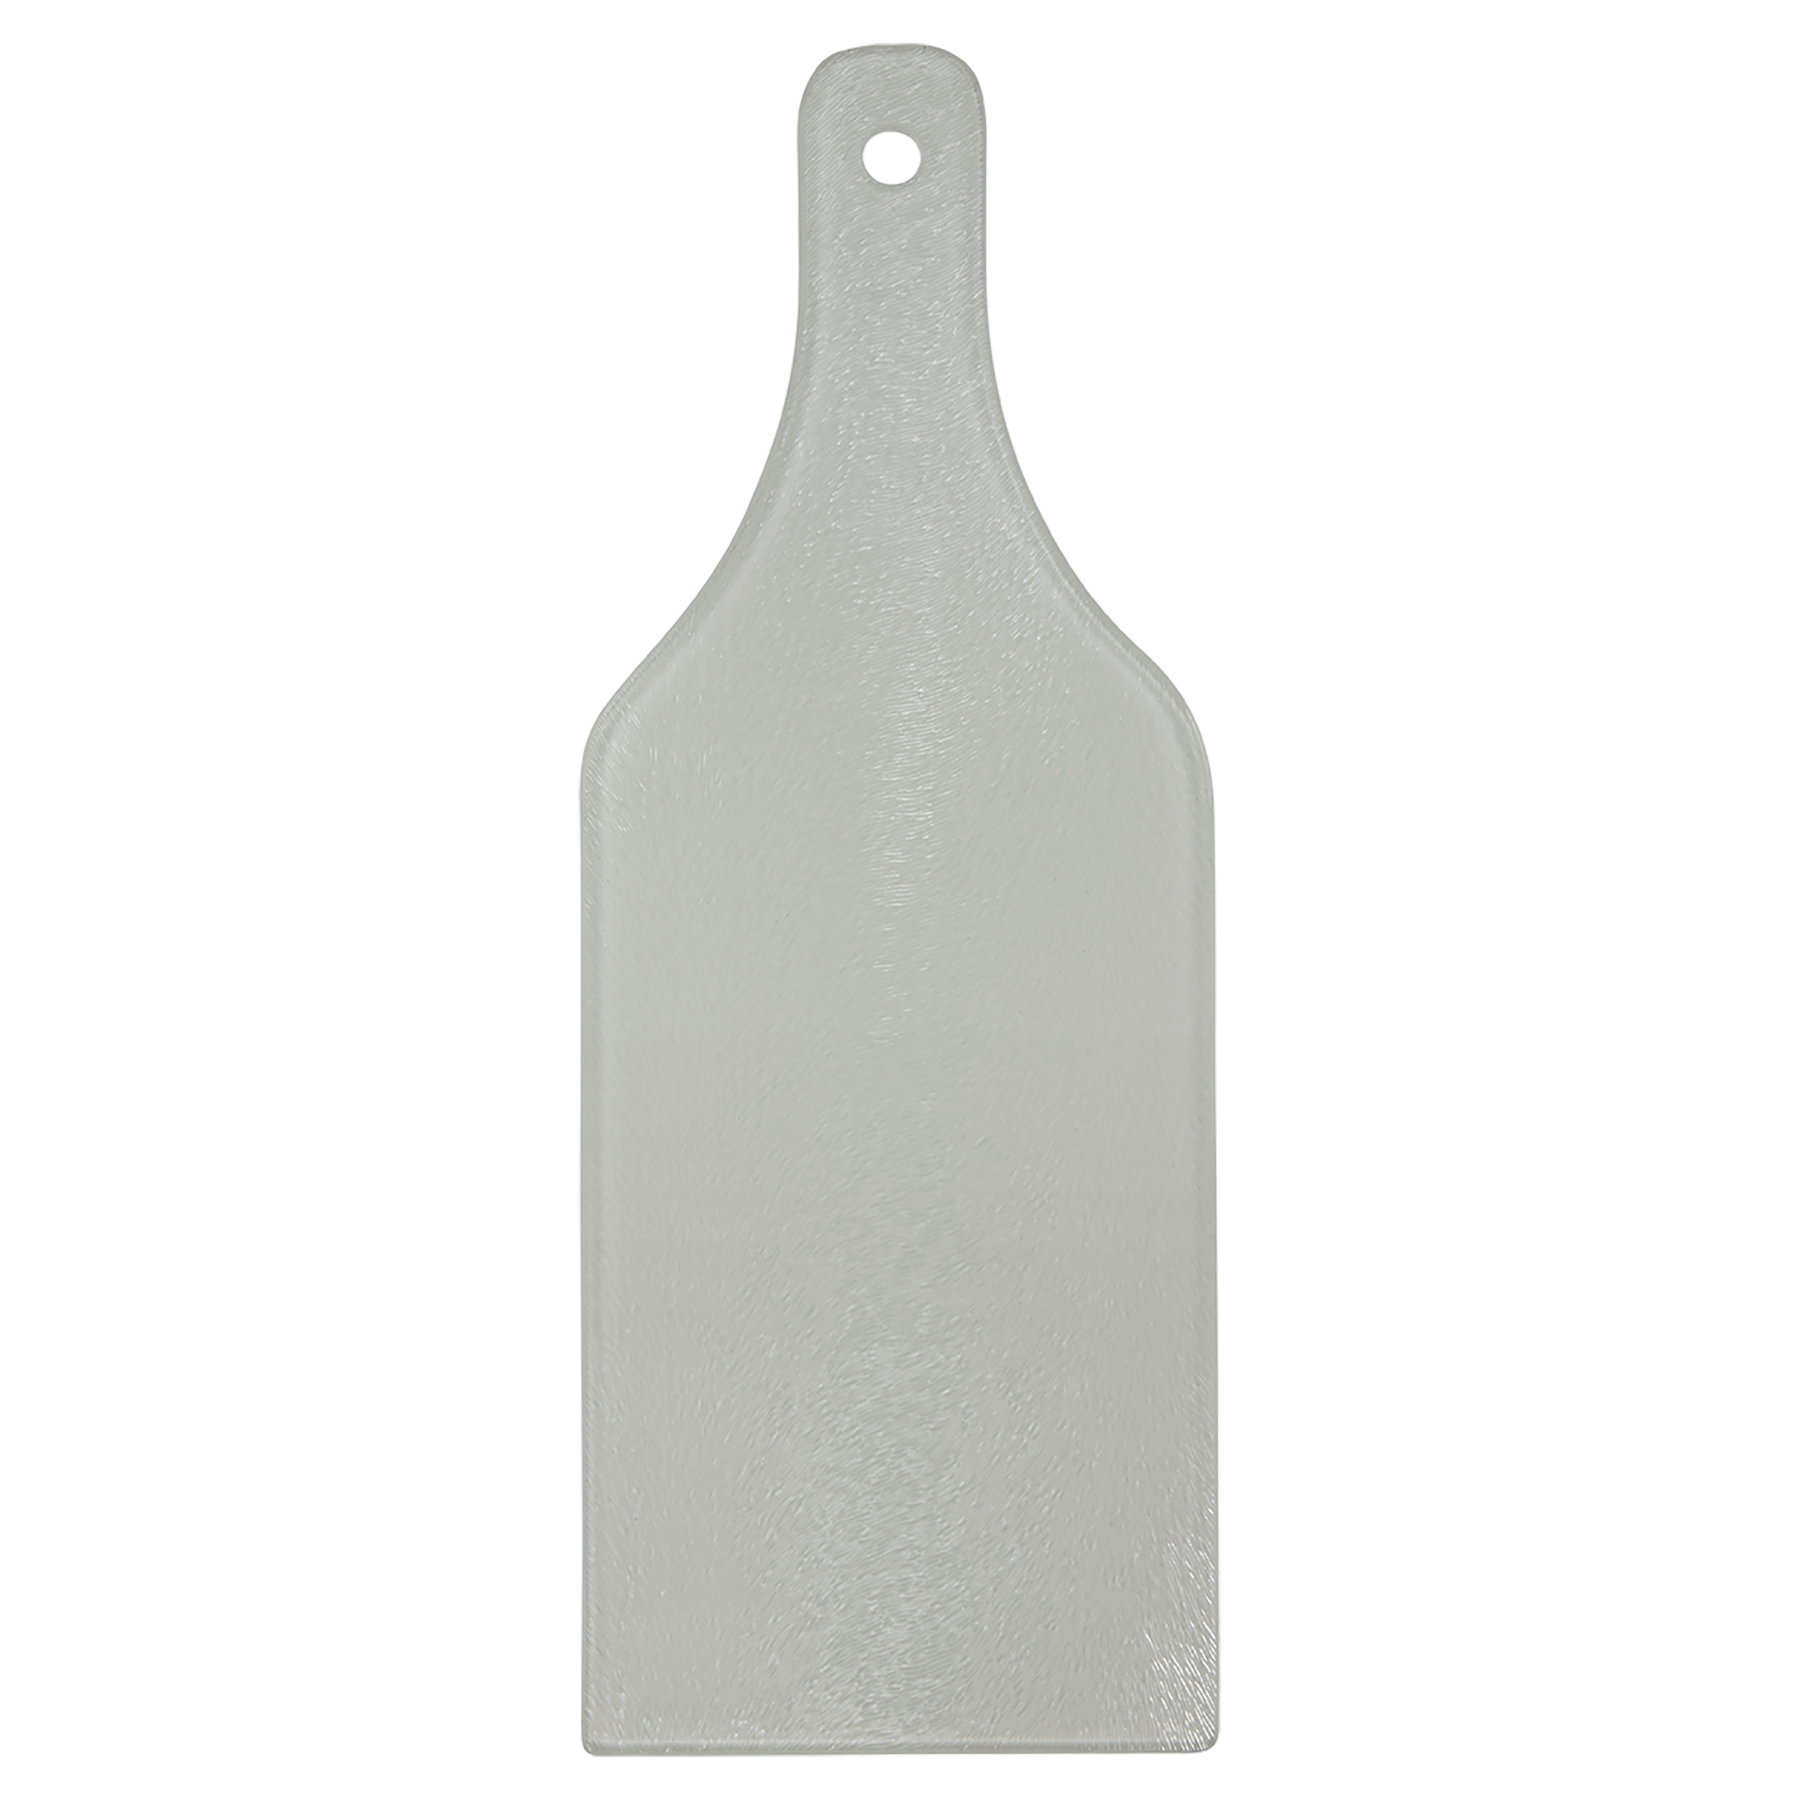 Wine Bottle Shaped Glass Sublimatable Cutting Board – The Blank Stockpile